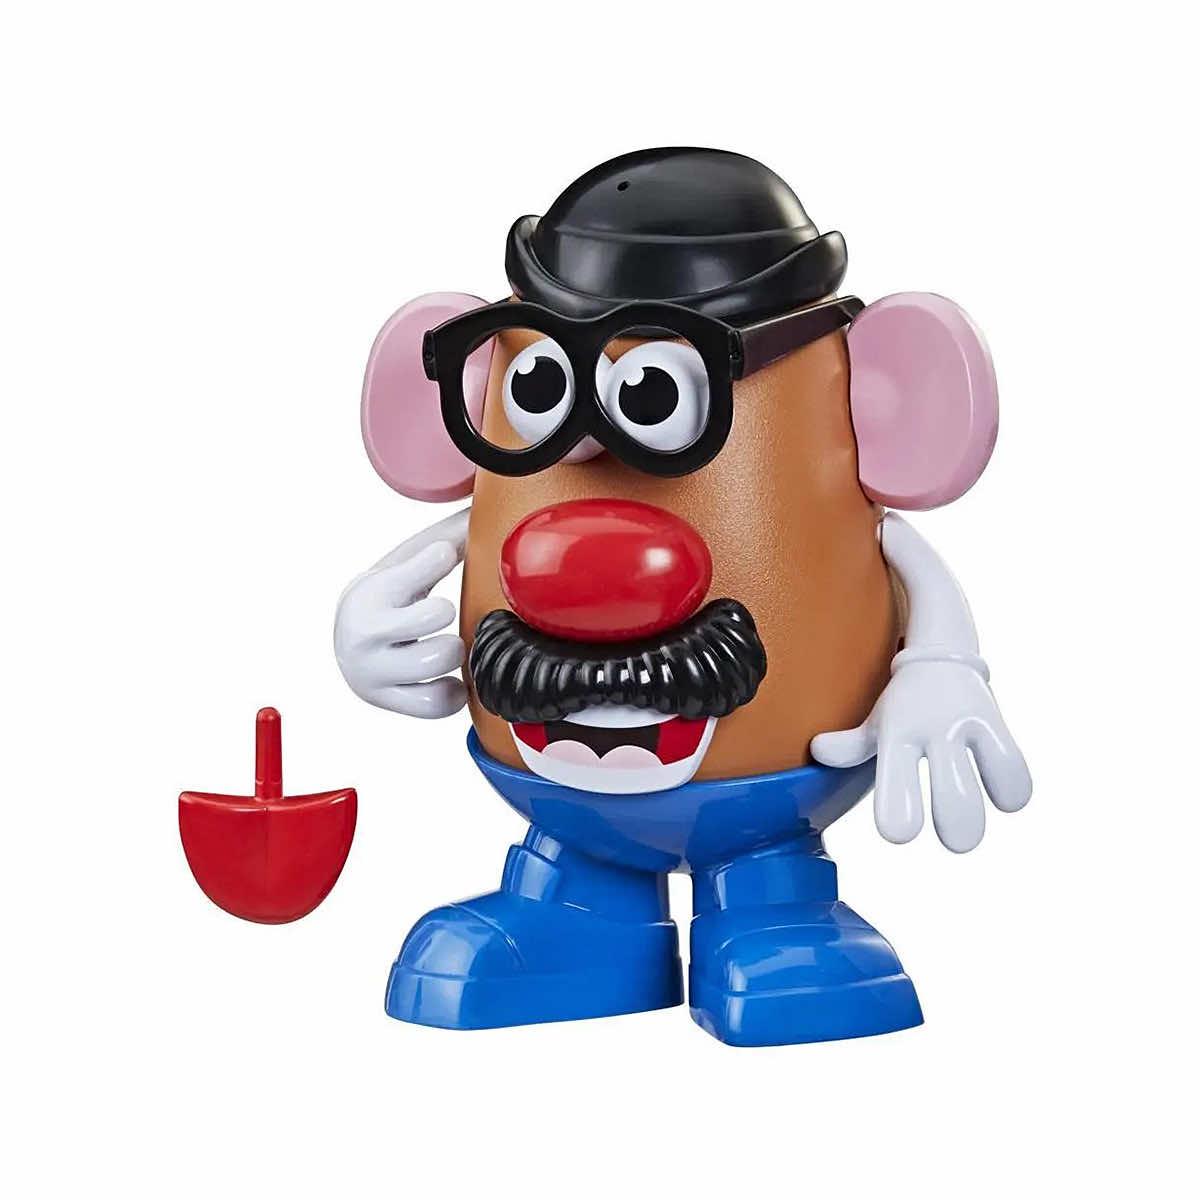 Mr Potato Head replacement Parts *Accessories* you pick,Please Read  Description!